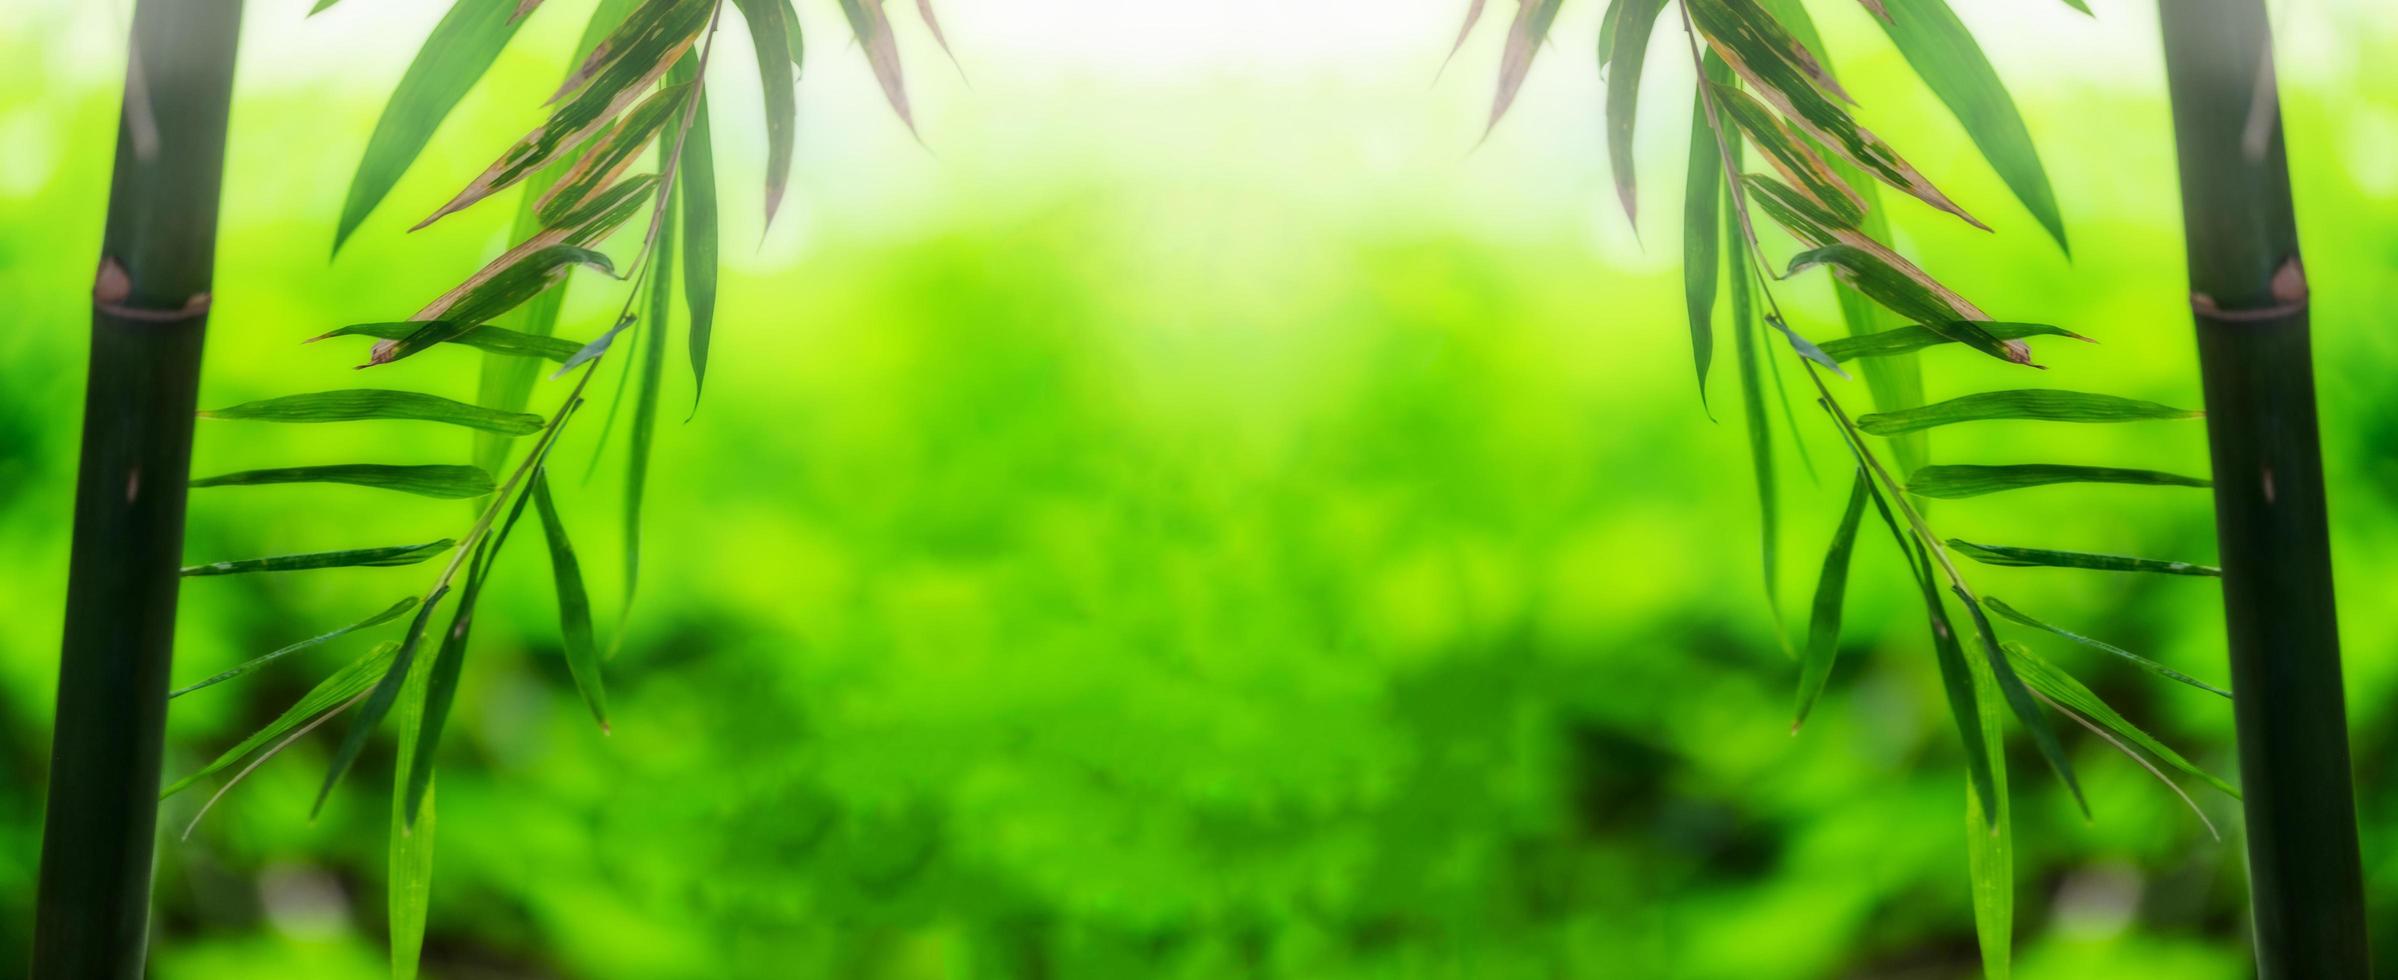 bamboe groen blad zacht wazig foto